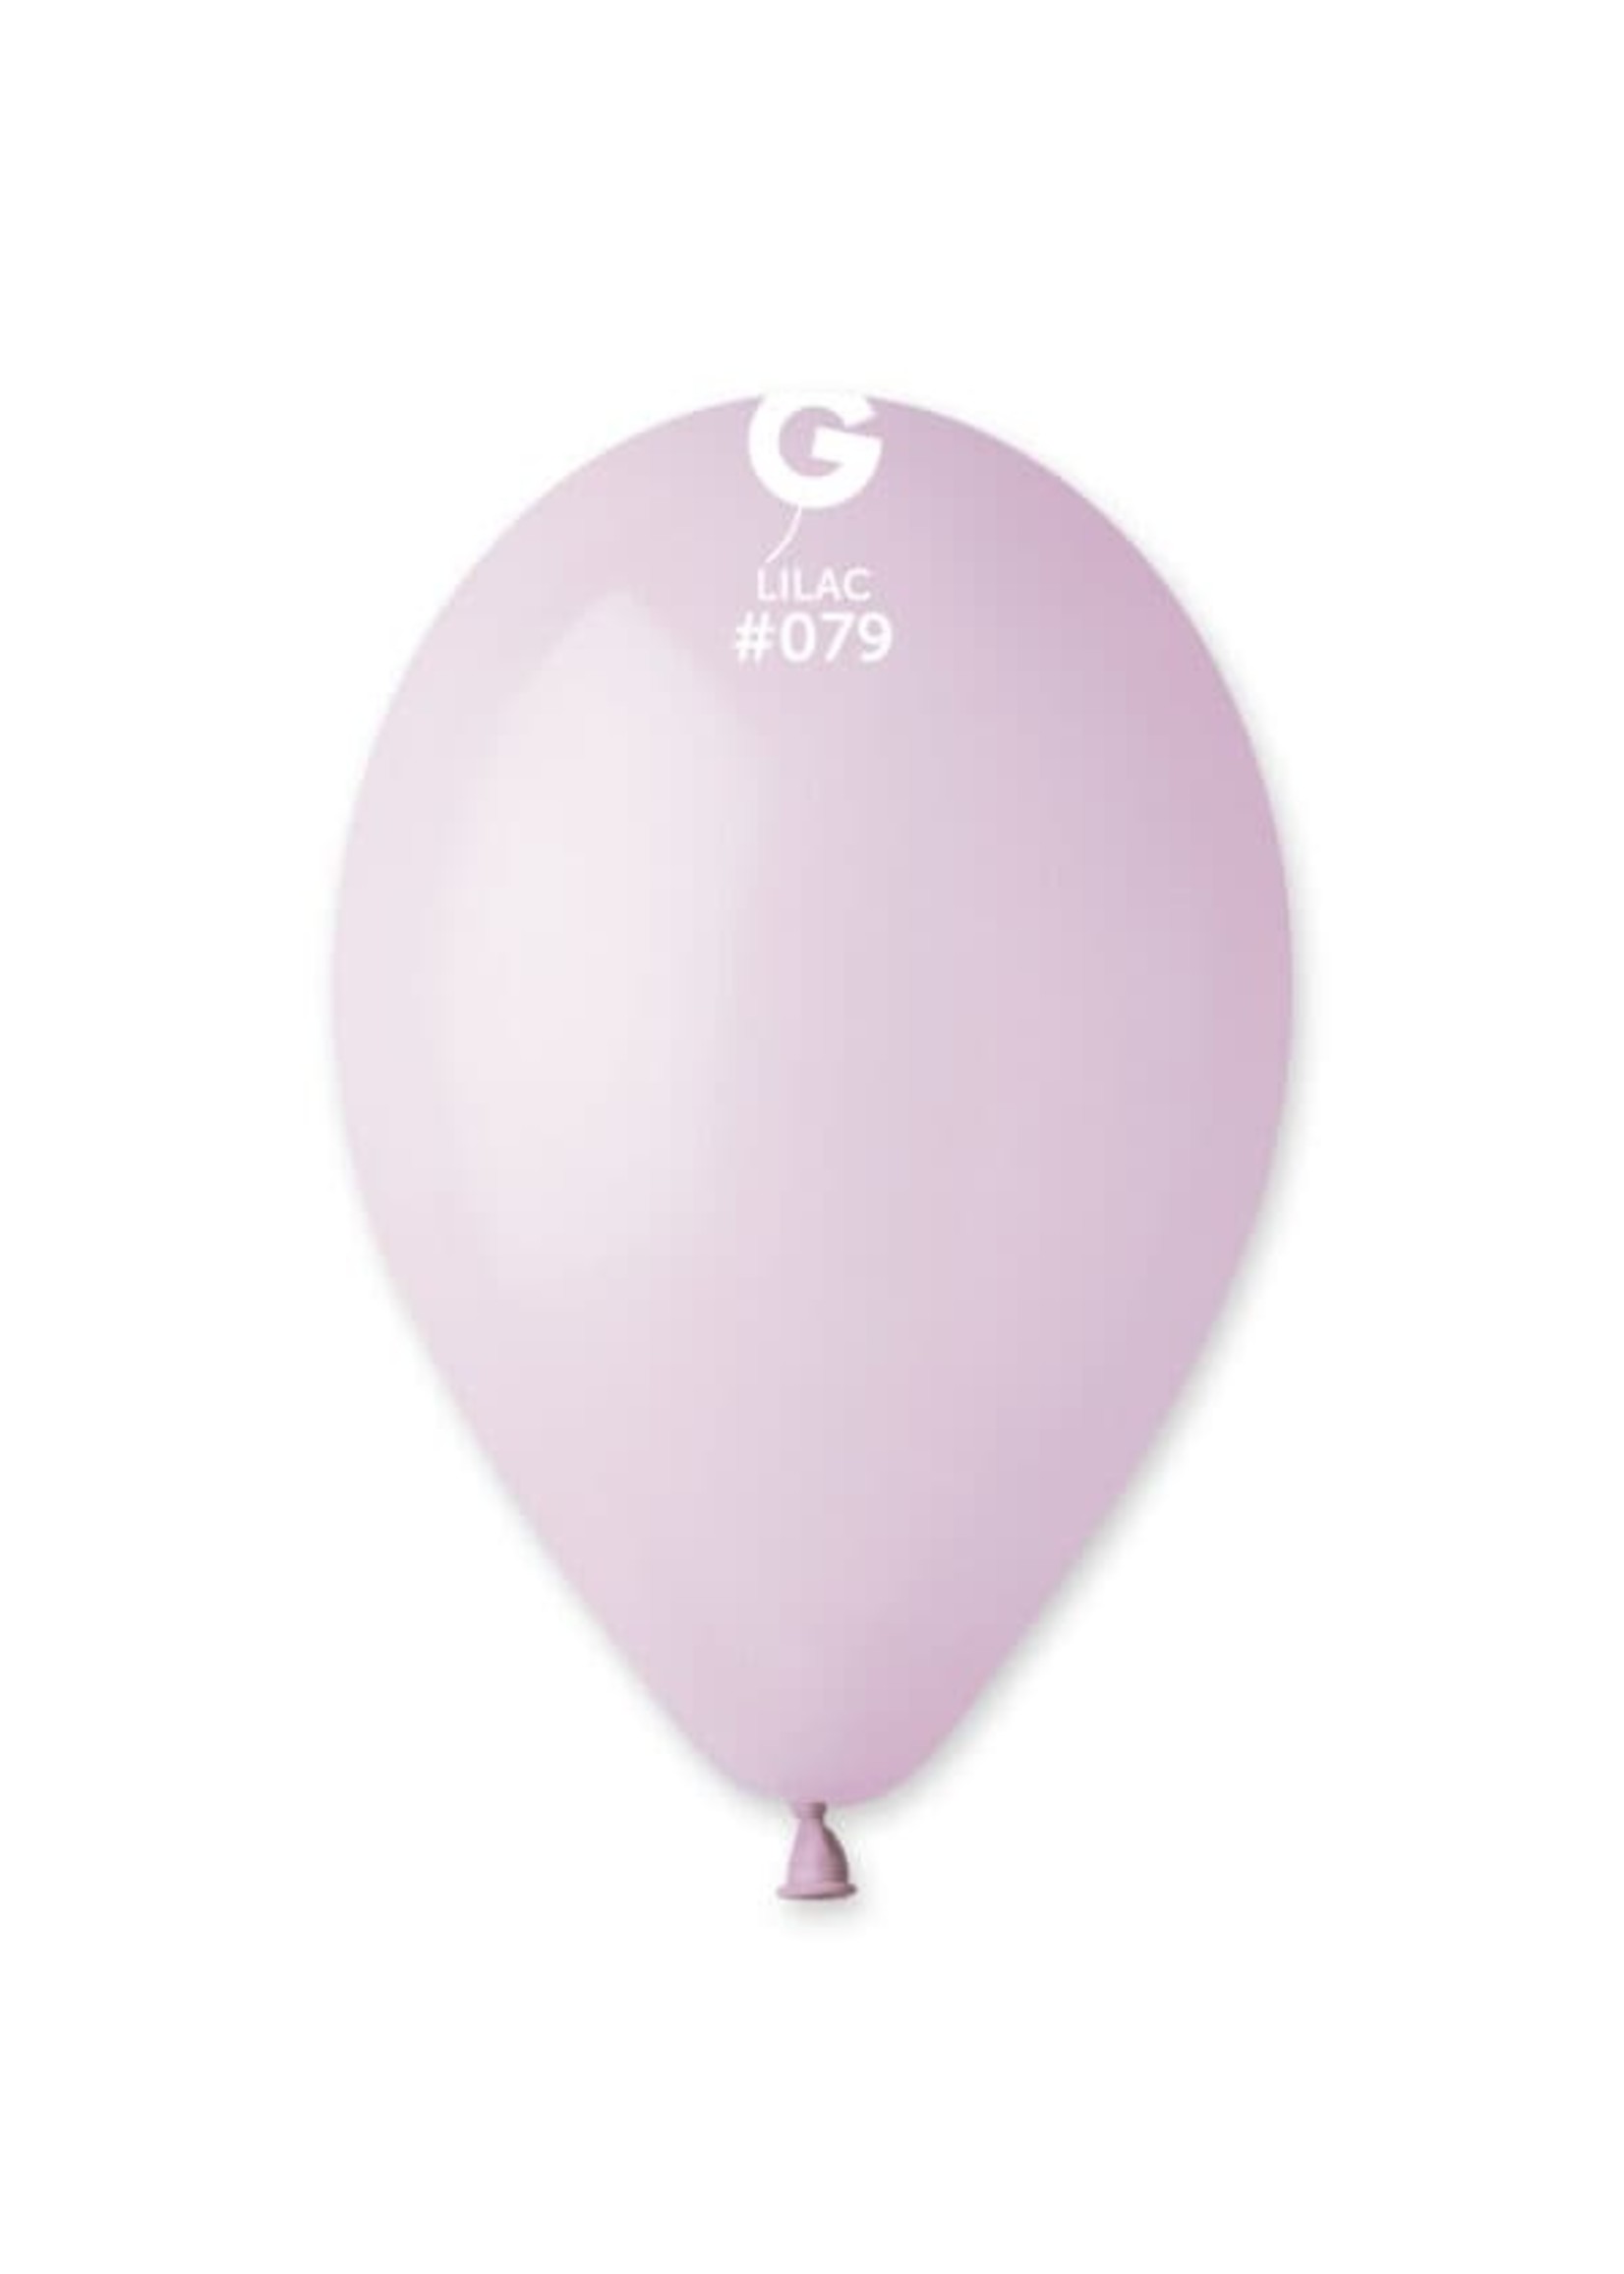 GEMAR Lilac #079 Latex Balloons, 12in, 50ct